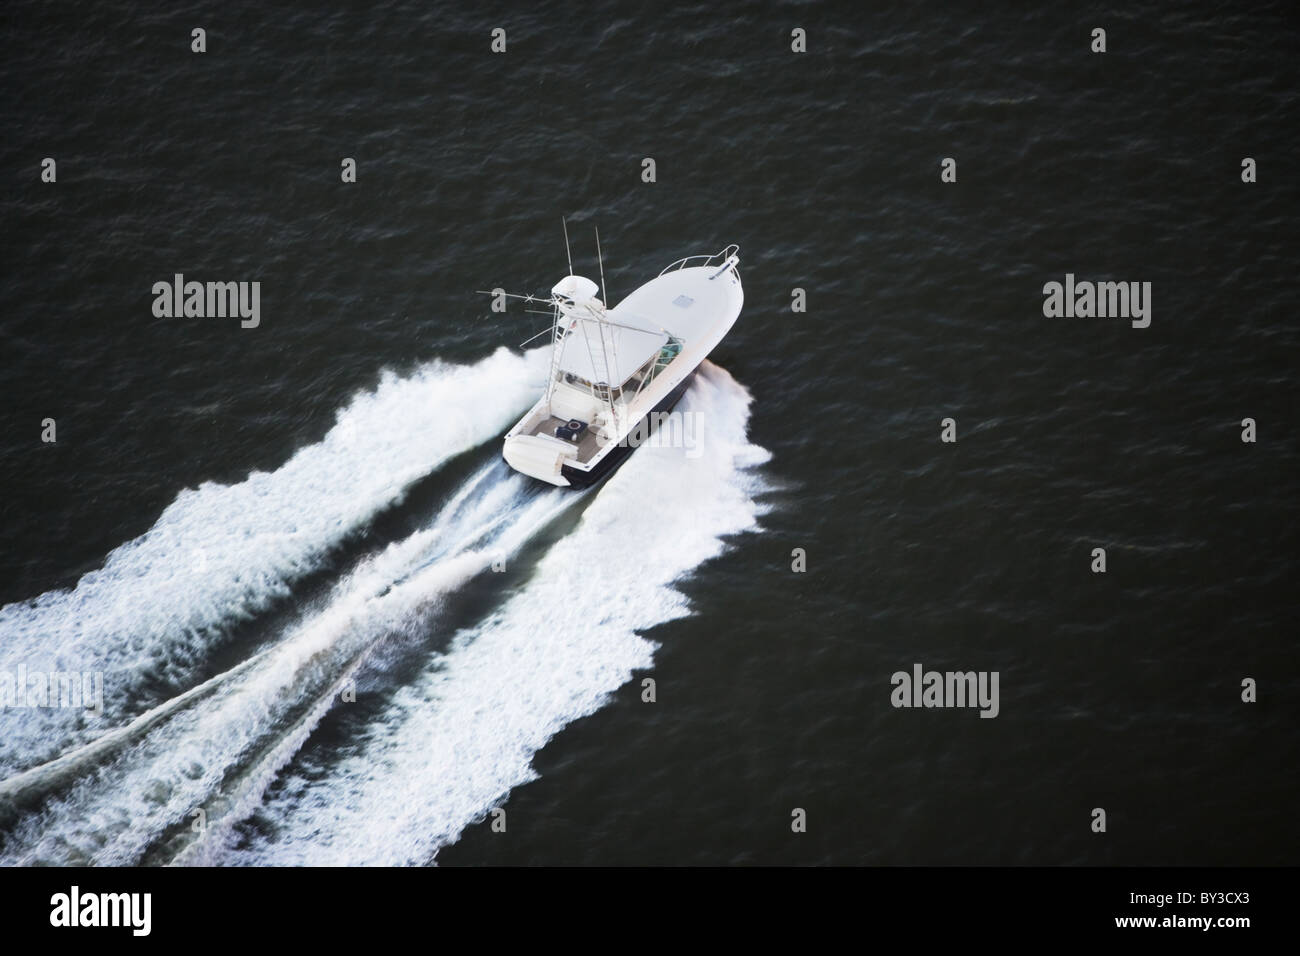 USA, New York, Long Island City, aerial view of speedboat Stock Photo